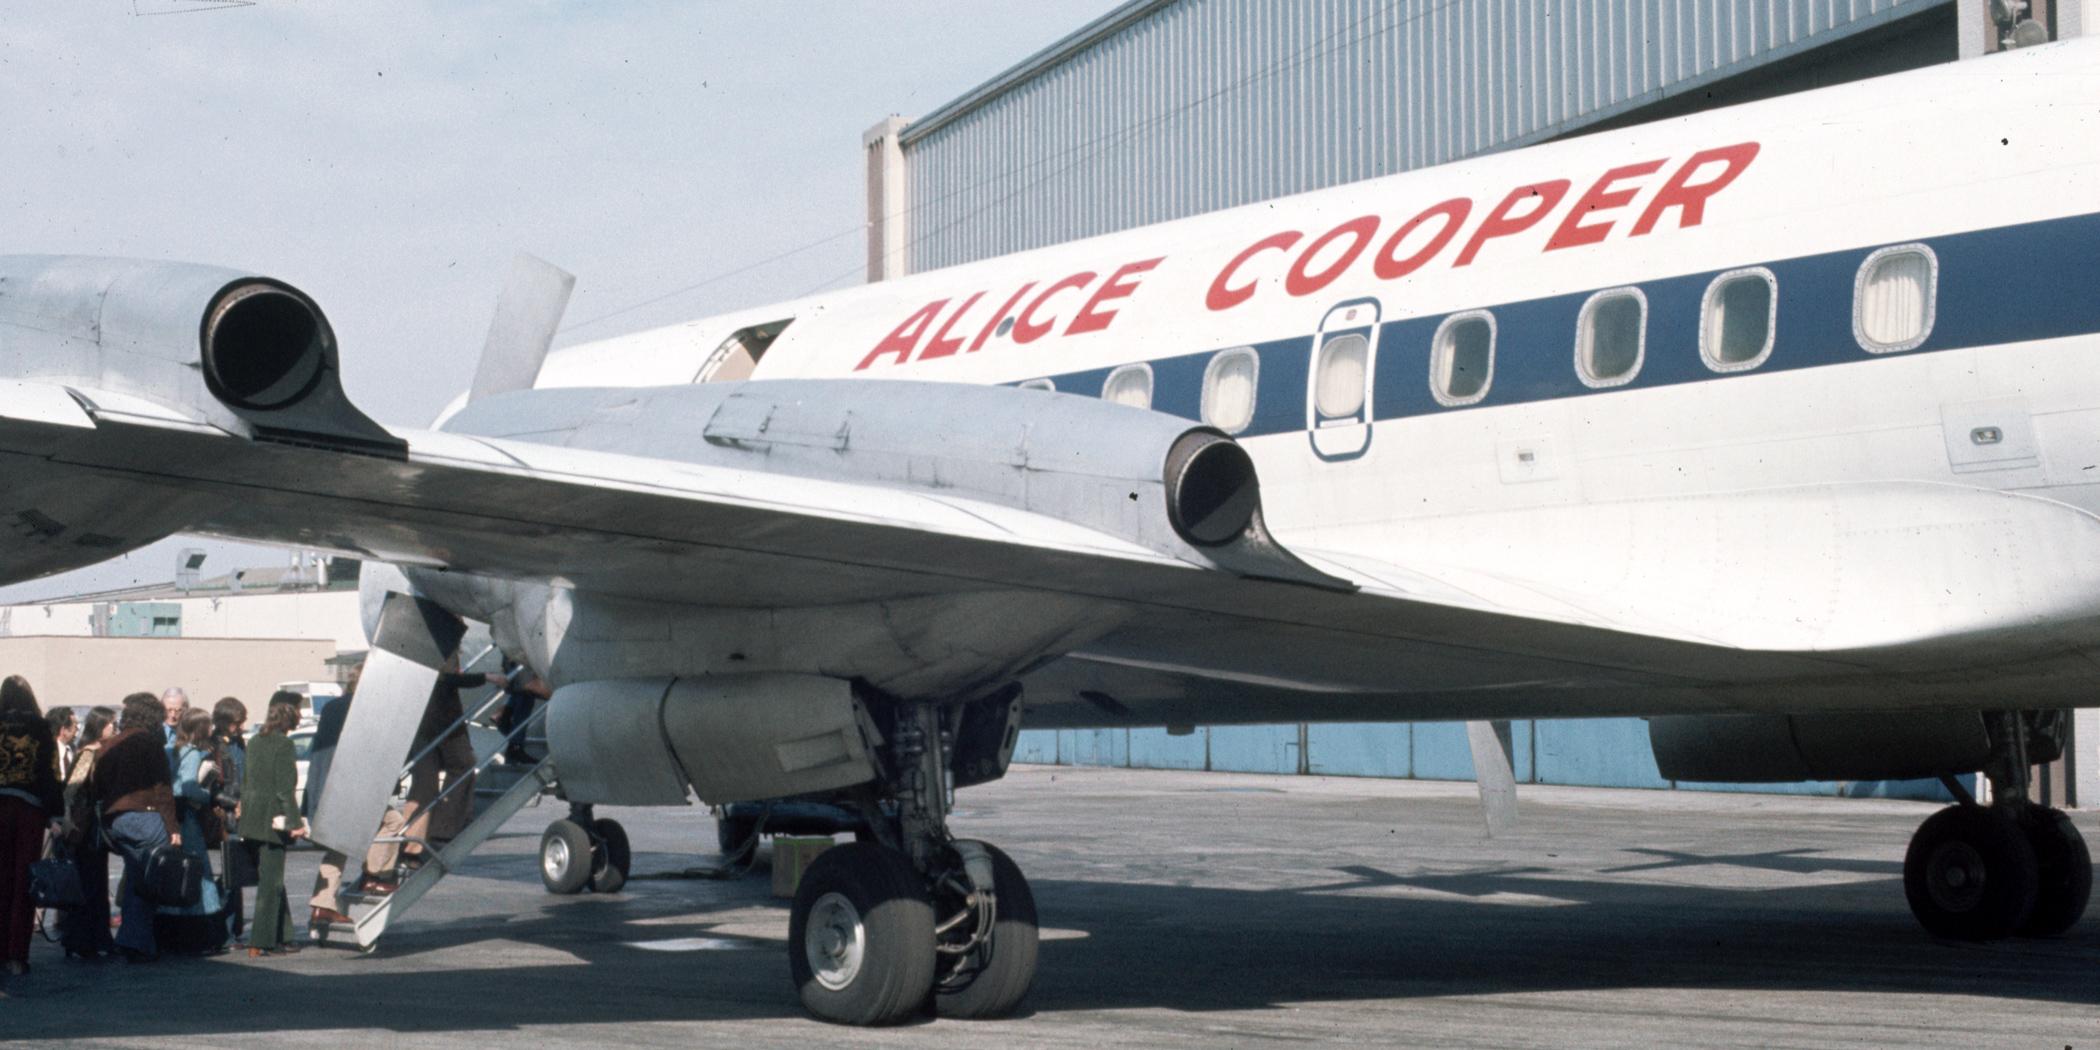 Alice Cooper's private jet for touring